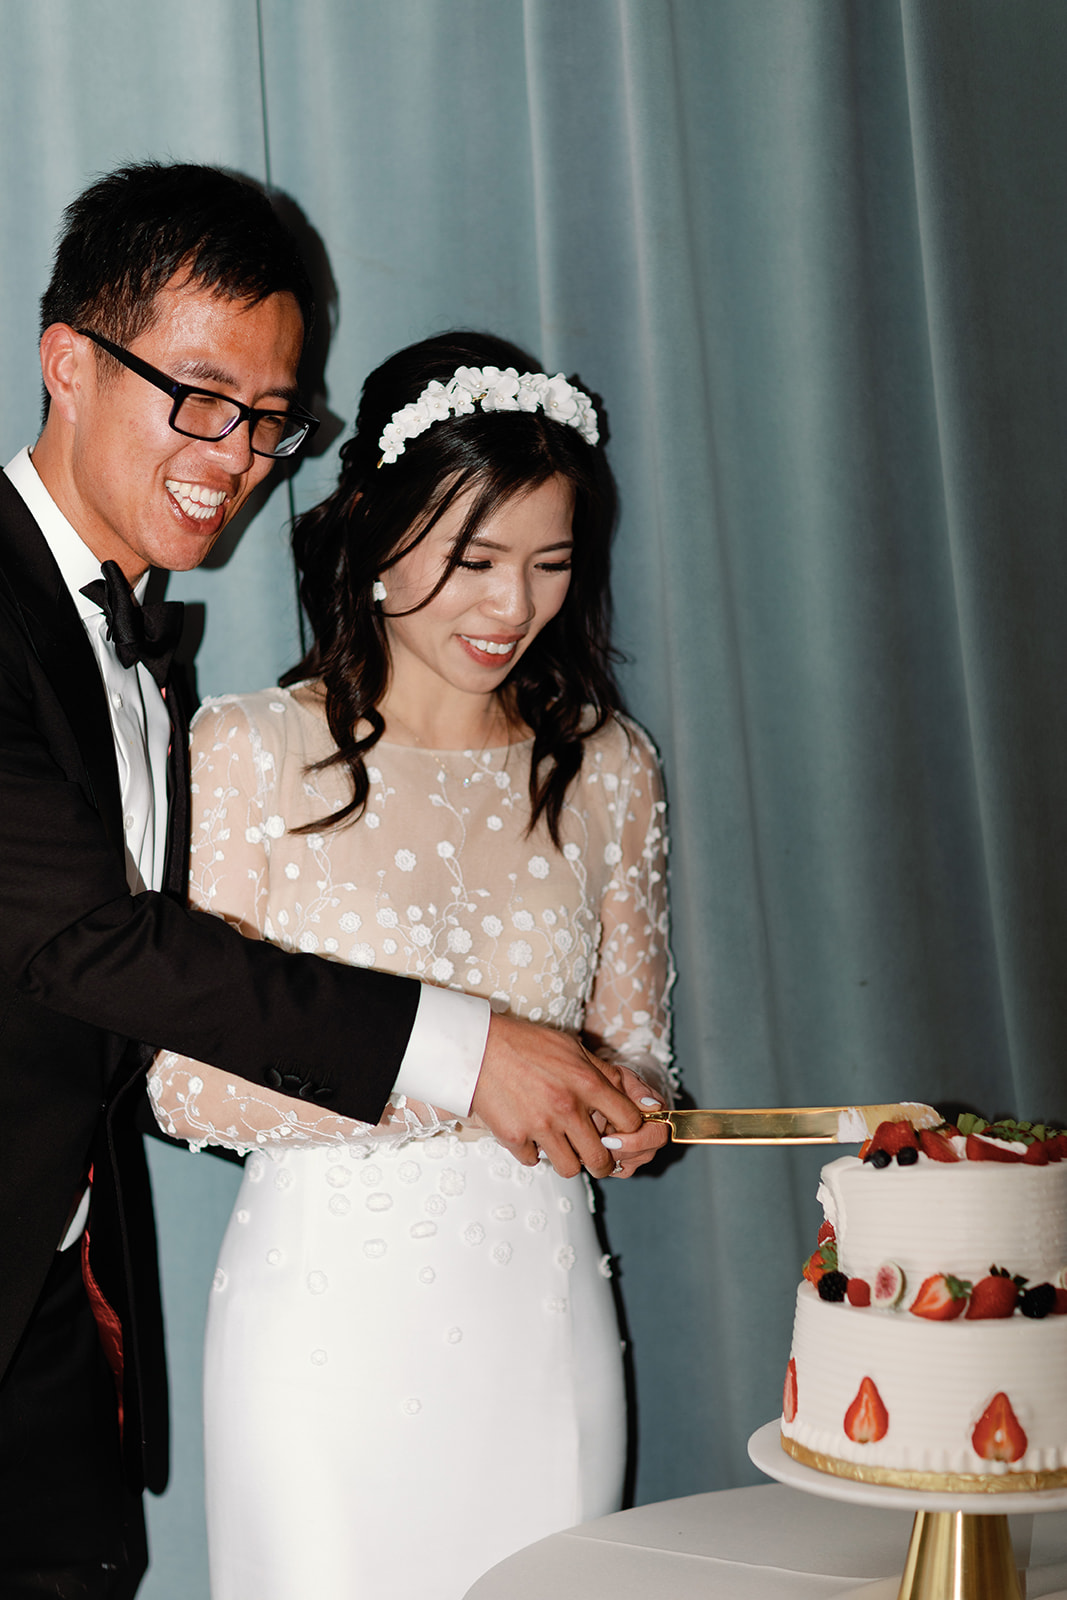 Conservatory of Flowers wedding reception cake cutting